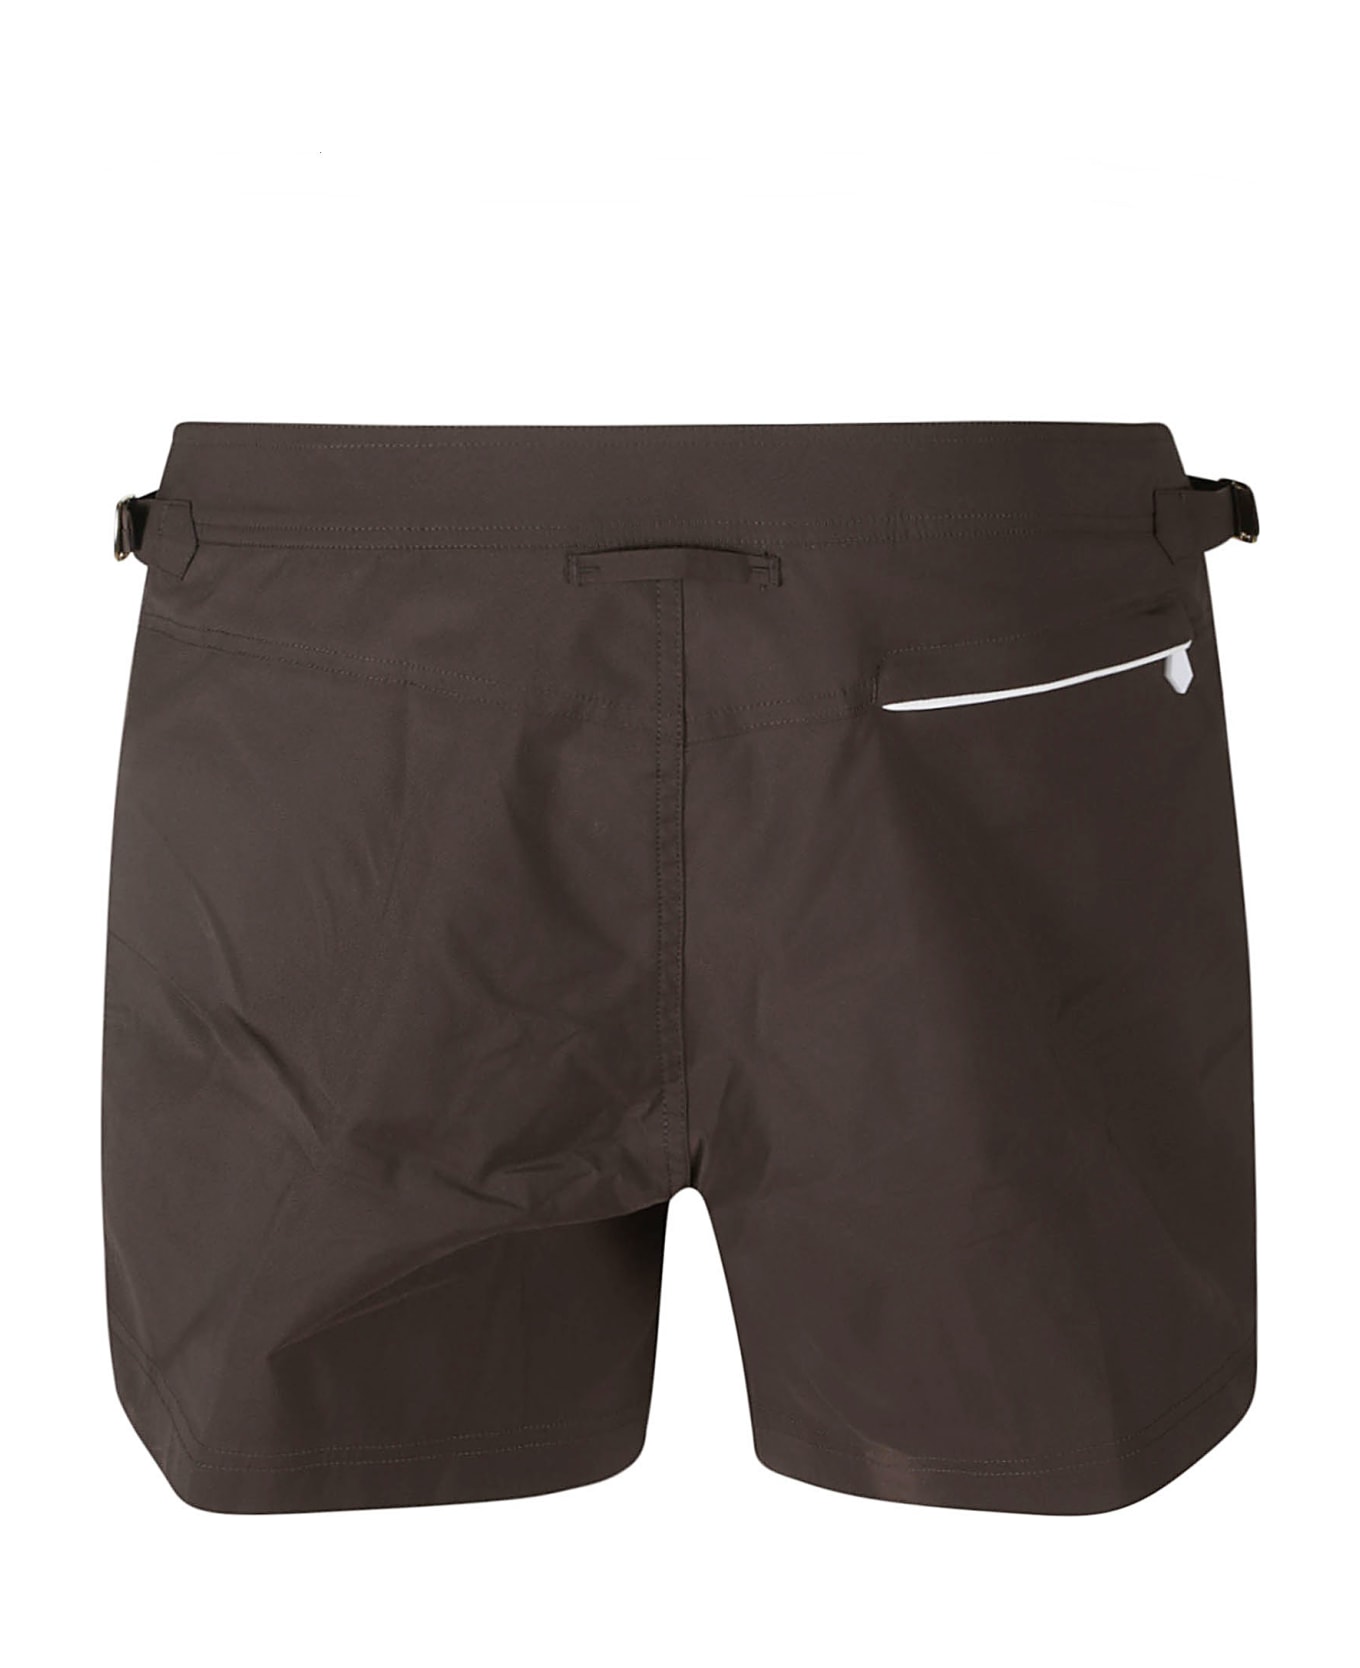 Tom Ford Side Stripe Classic Shorts - Dark Brown/White